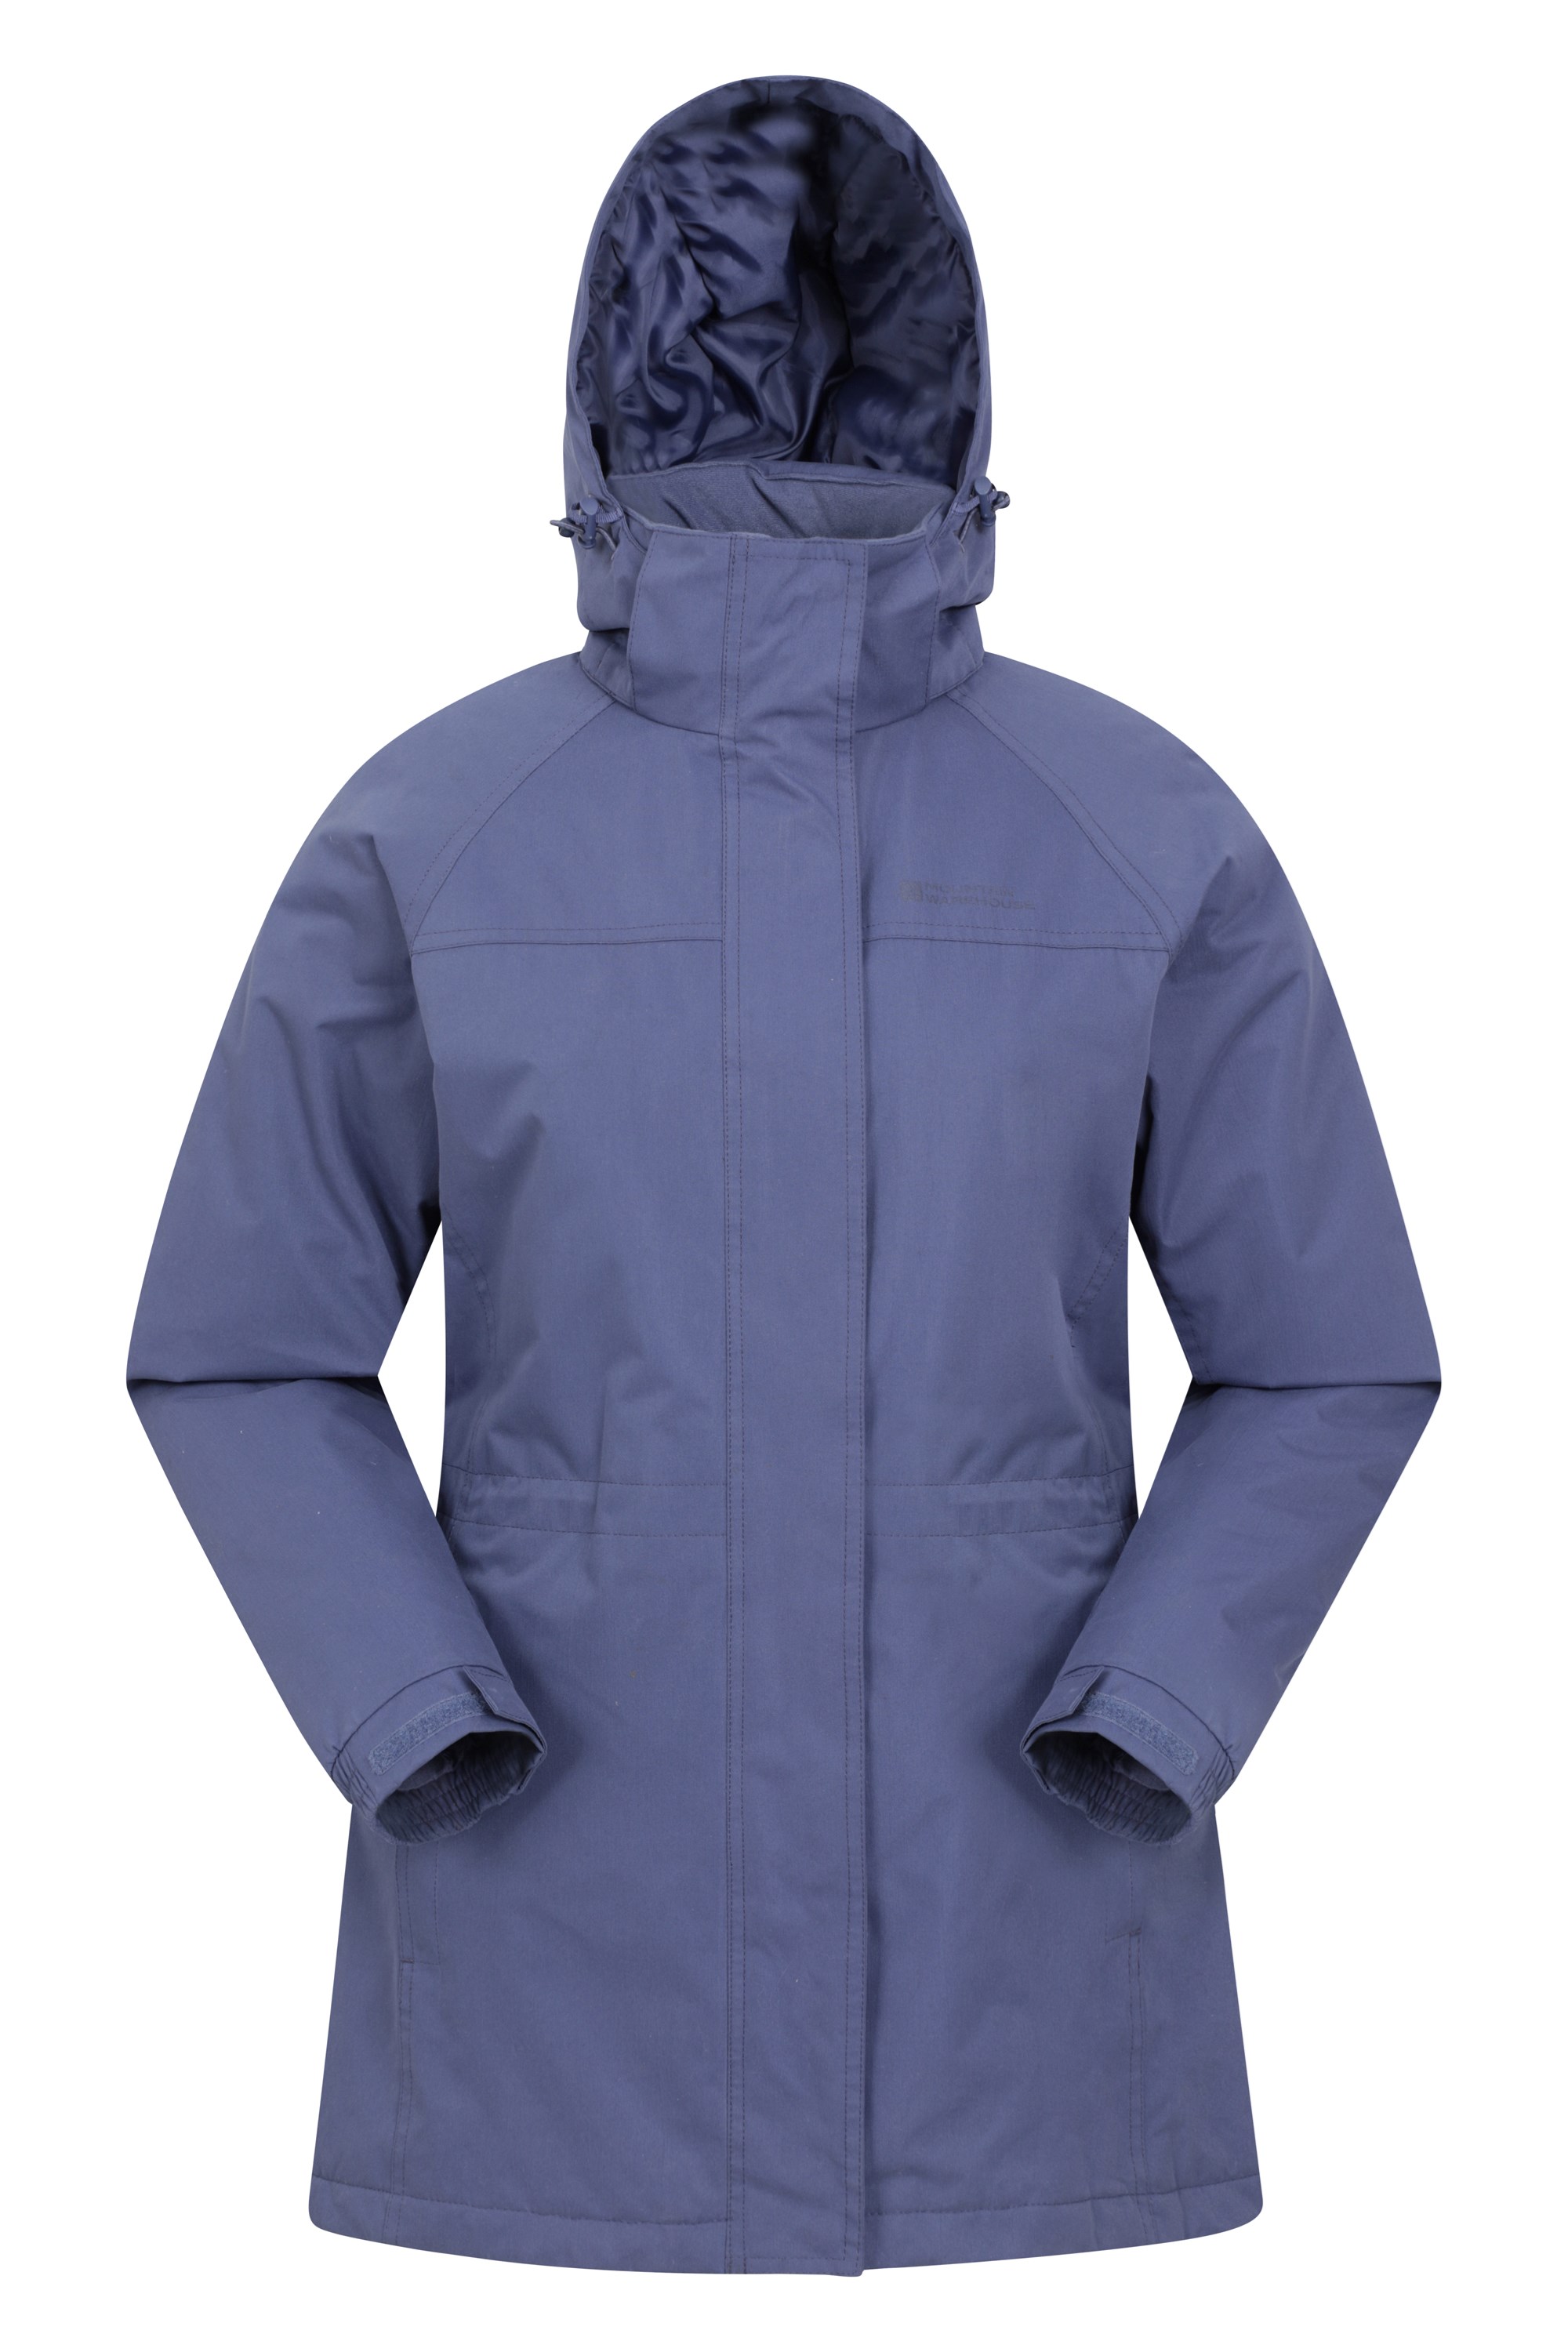 Westport Womens Winter Long Jacket - Blue